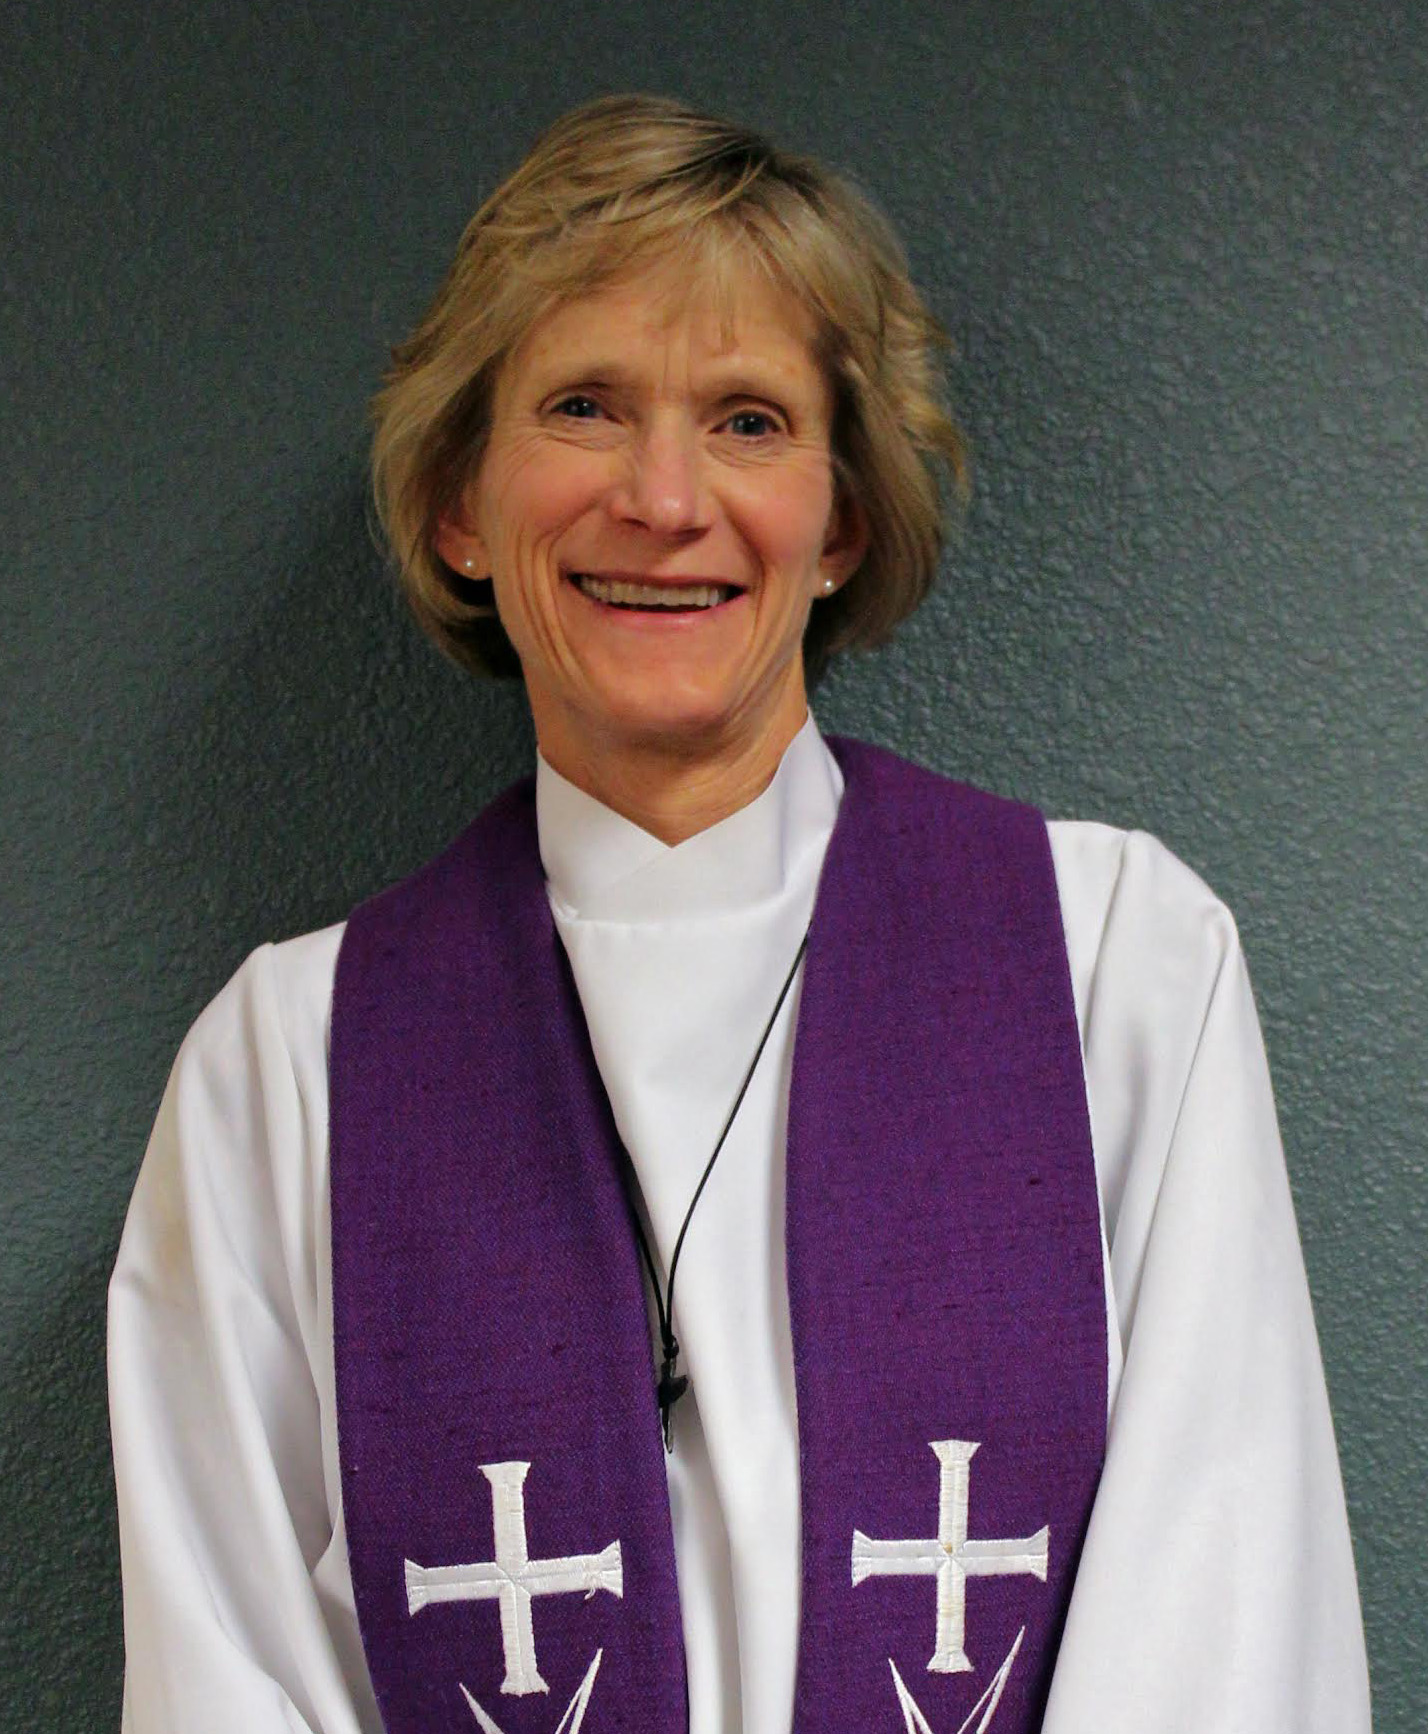 Ann Hultquist Vested Website Augustana Lutheran Church Denver Co 